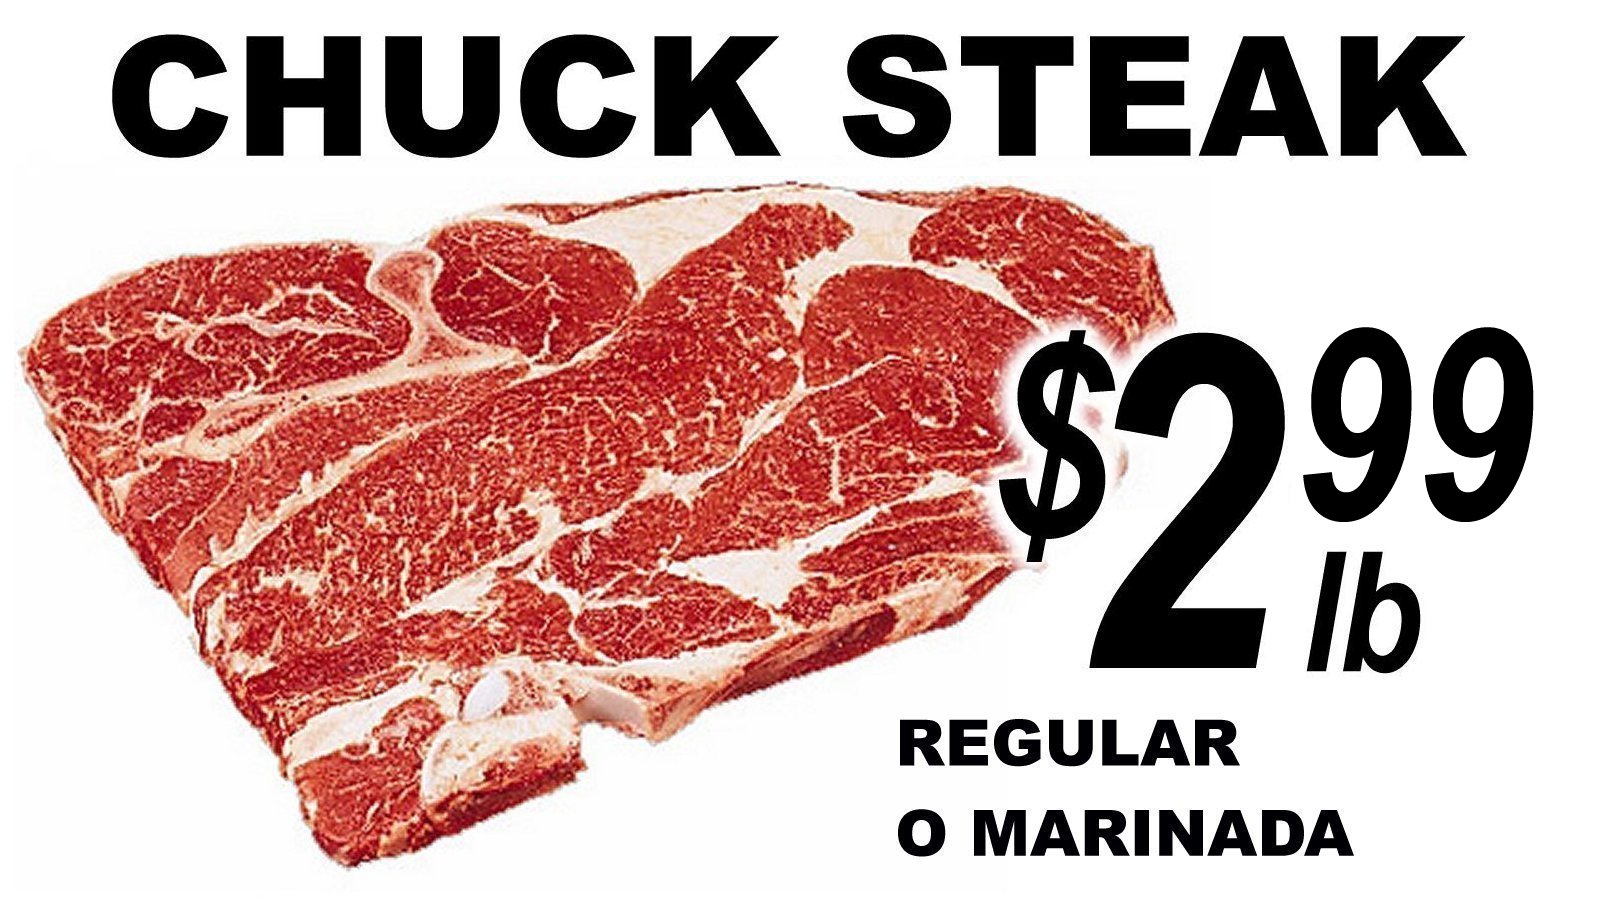 m Chuck Steak